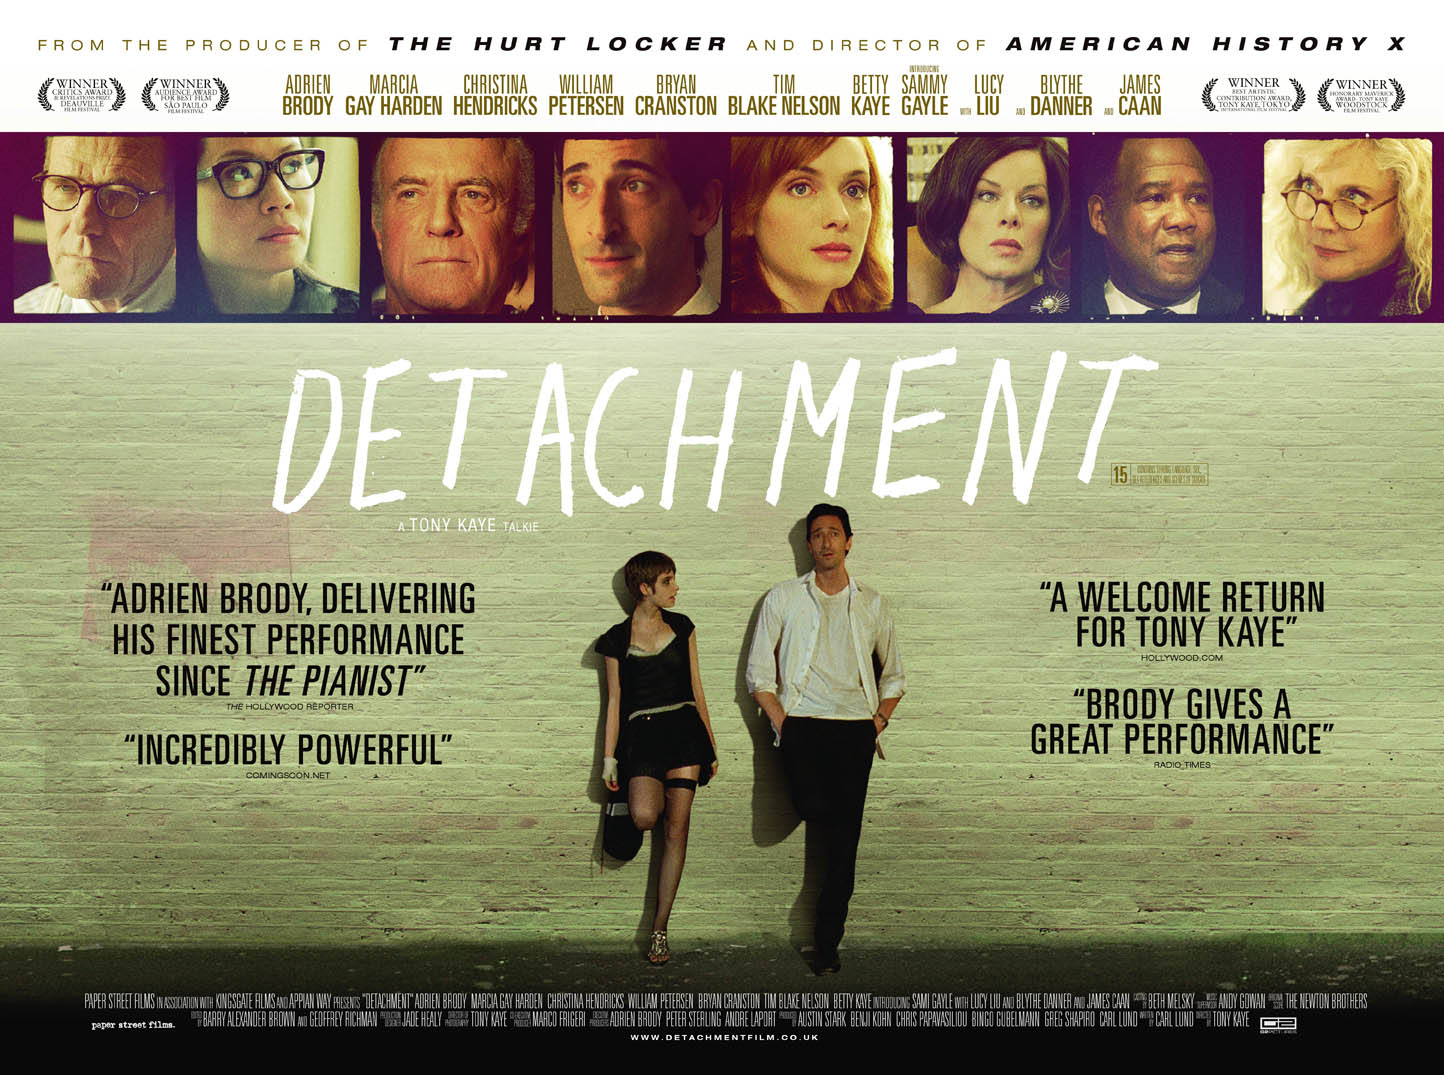 Detachment UK Poster